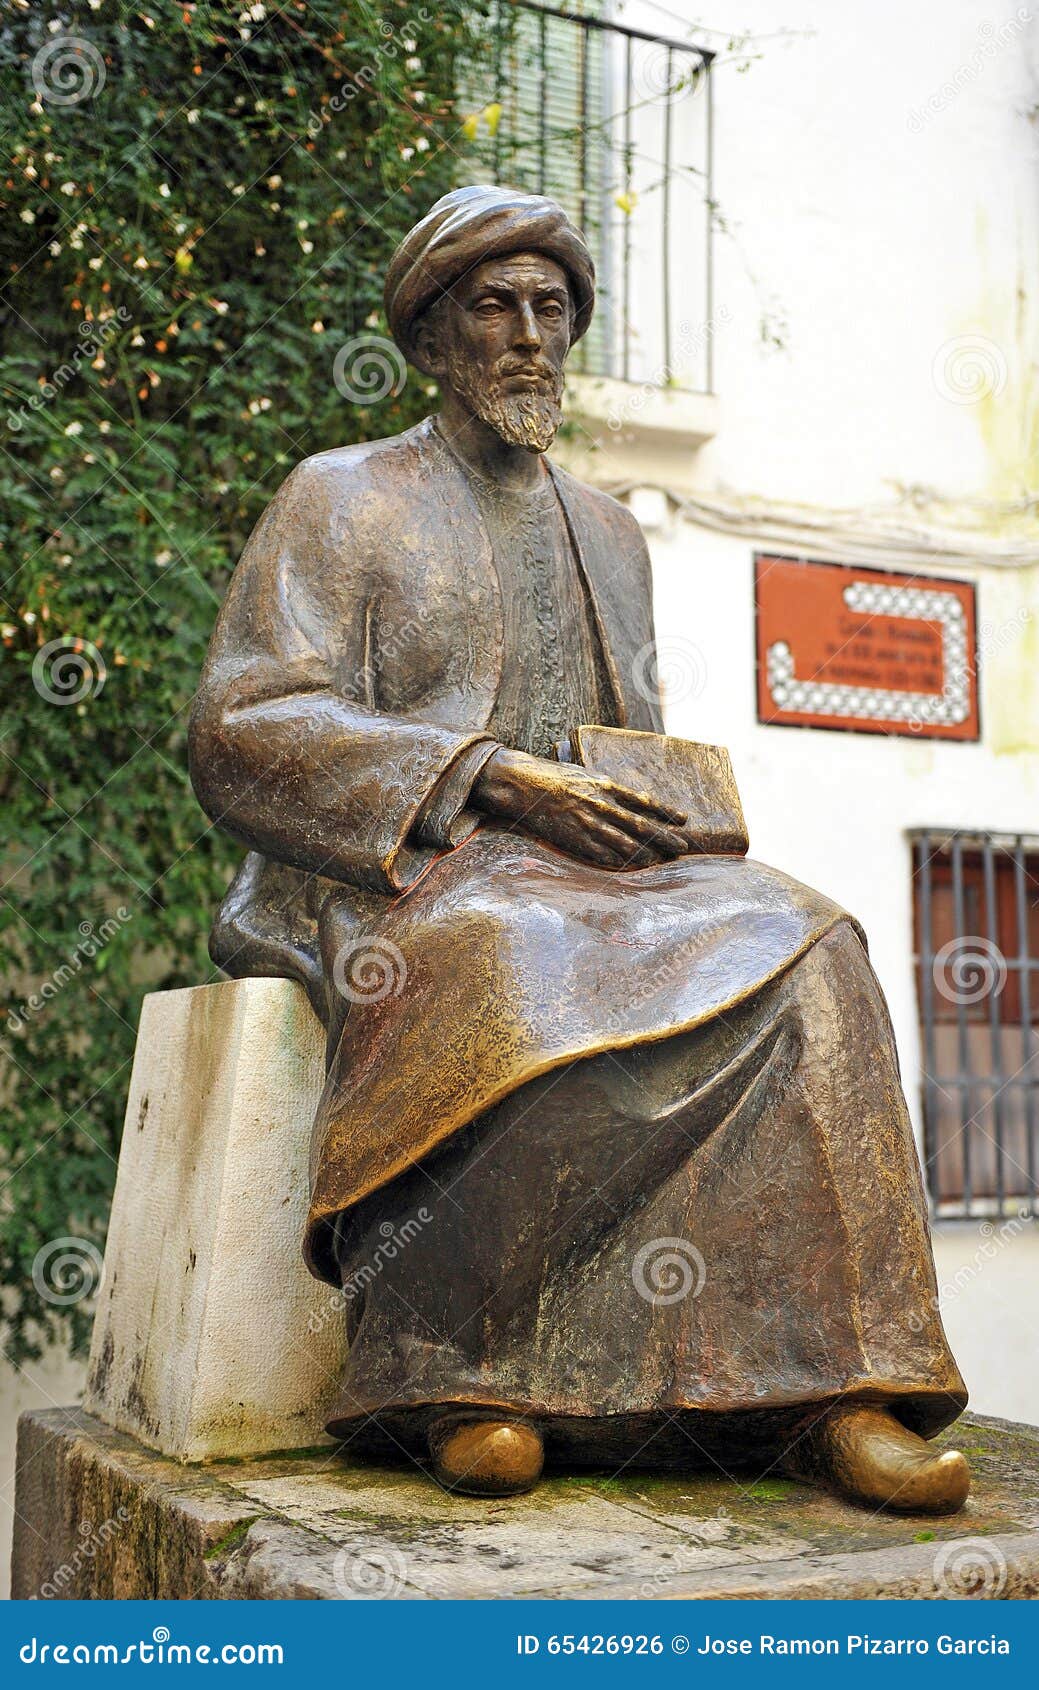 maimonides, jewish physician and philosopher, cordoba, spain